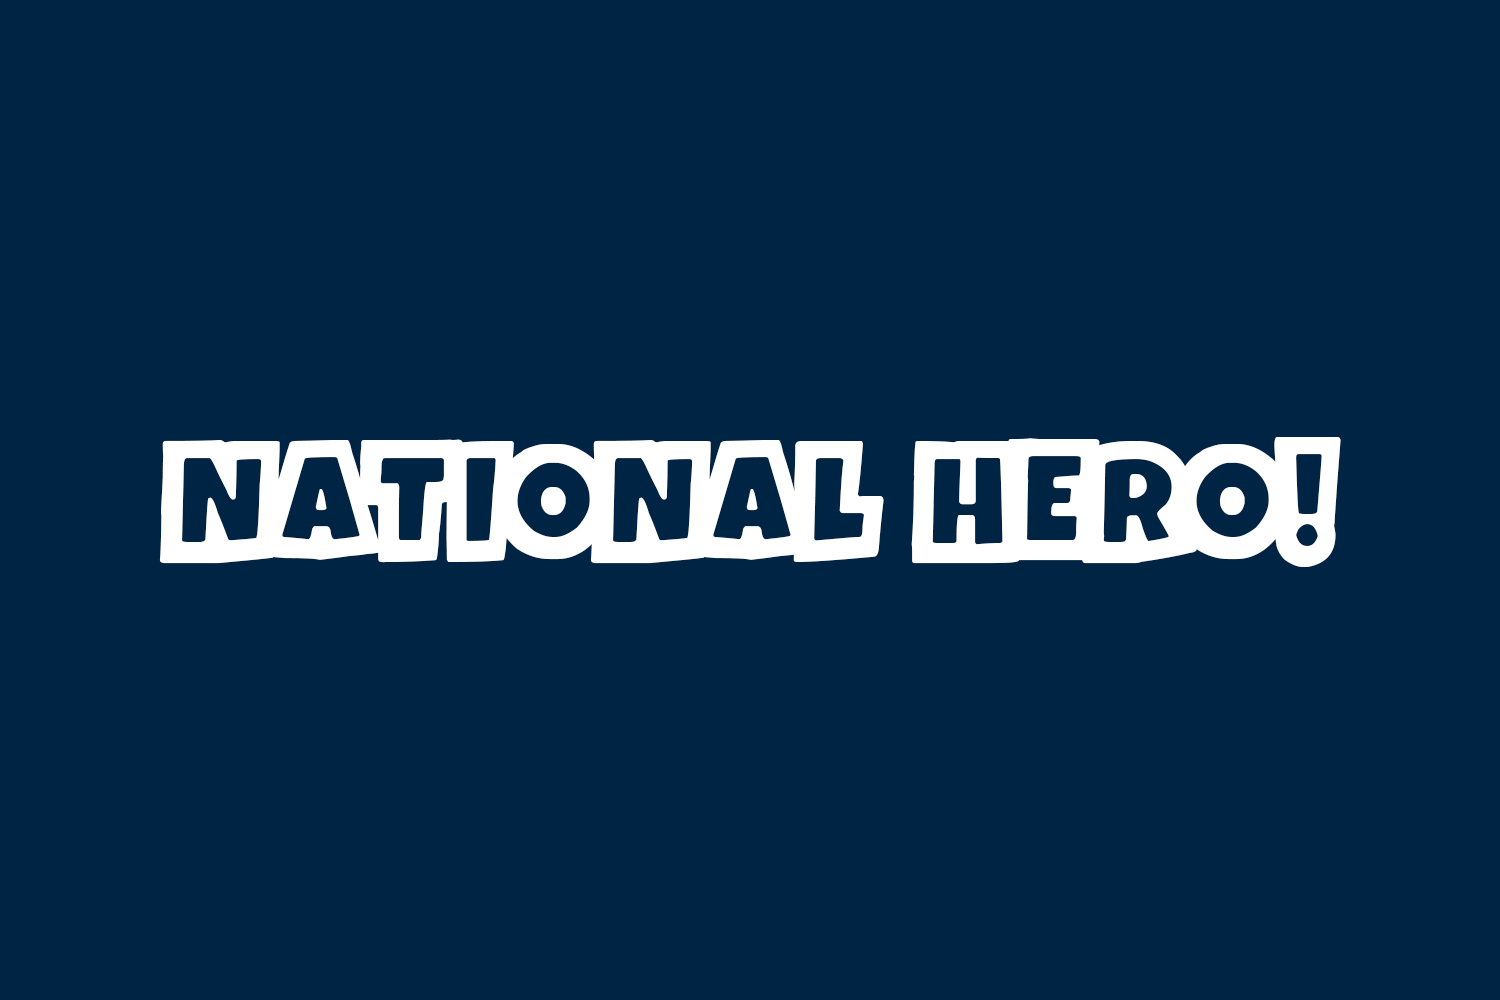 National Hero! Free Font